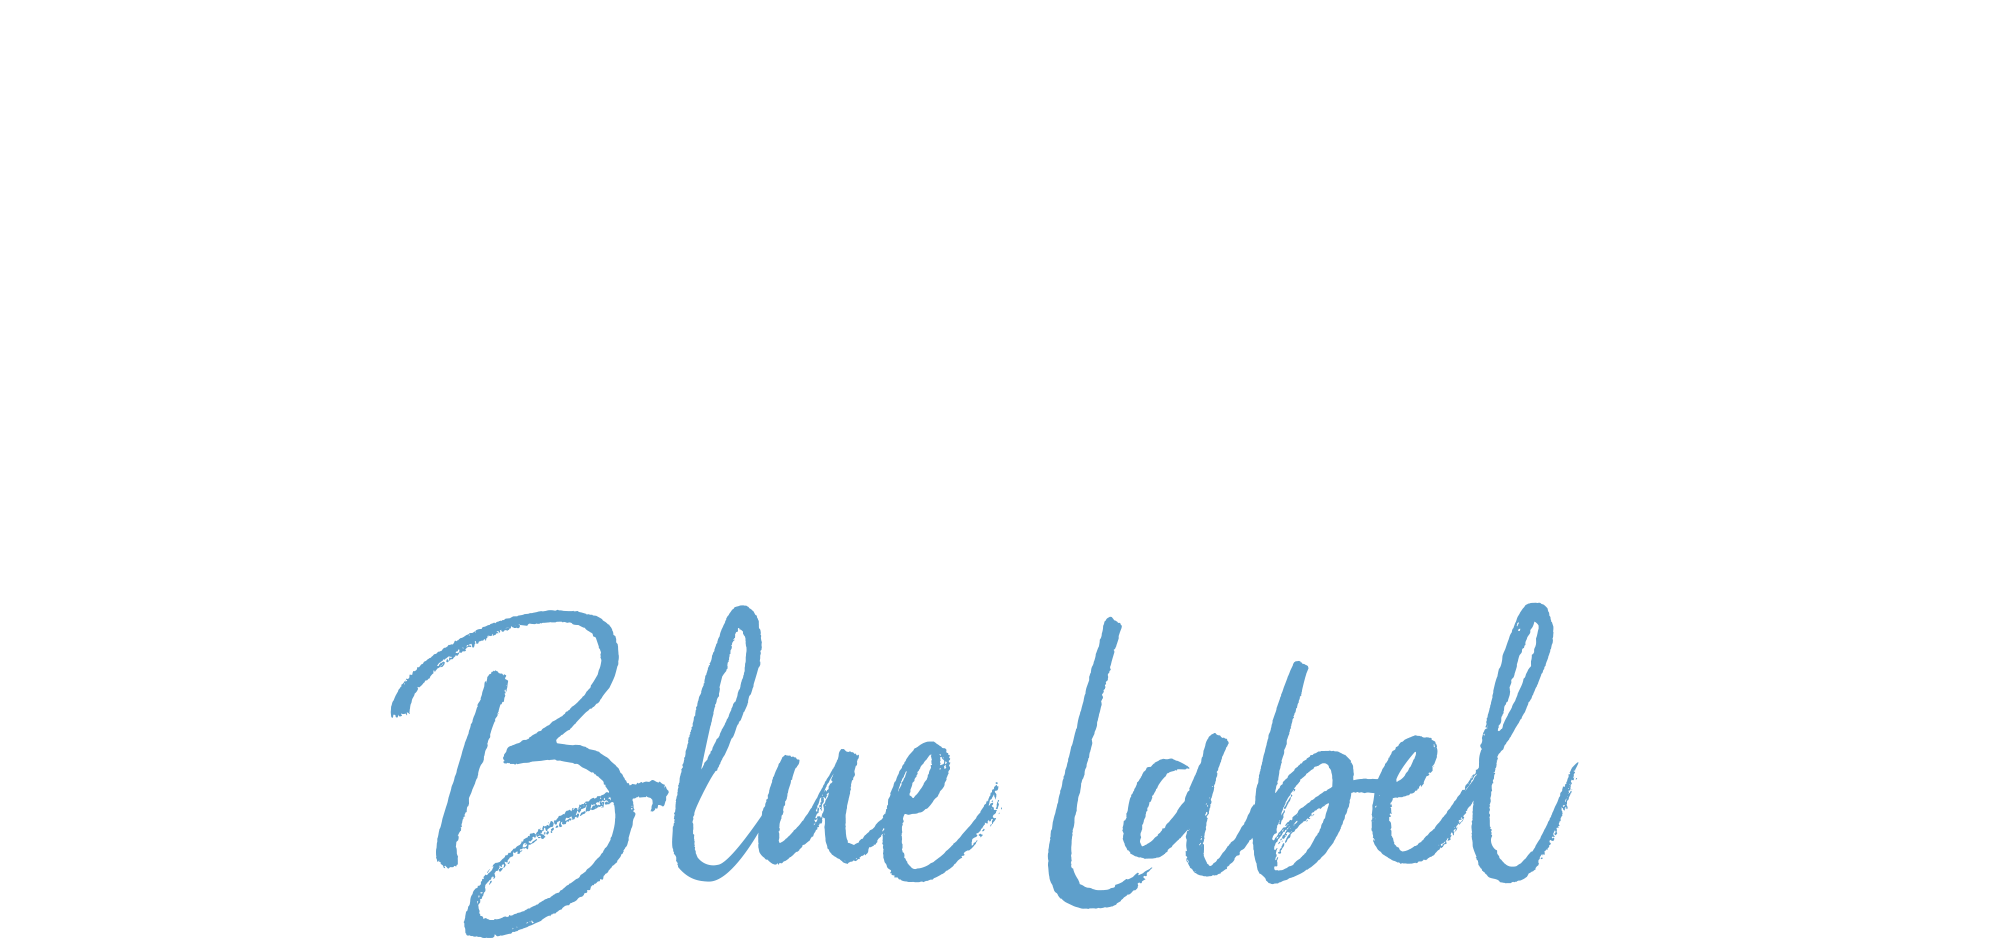 Crossfit Blue label